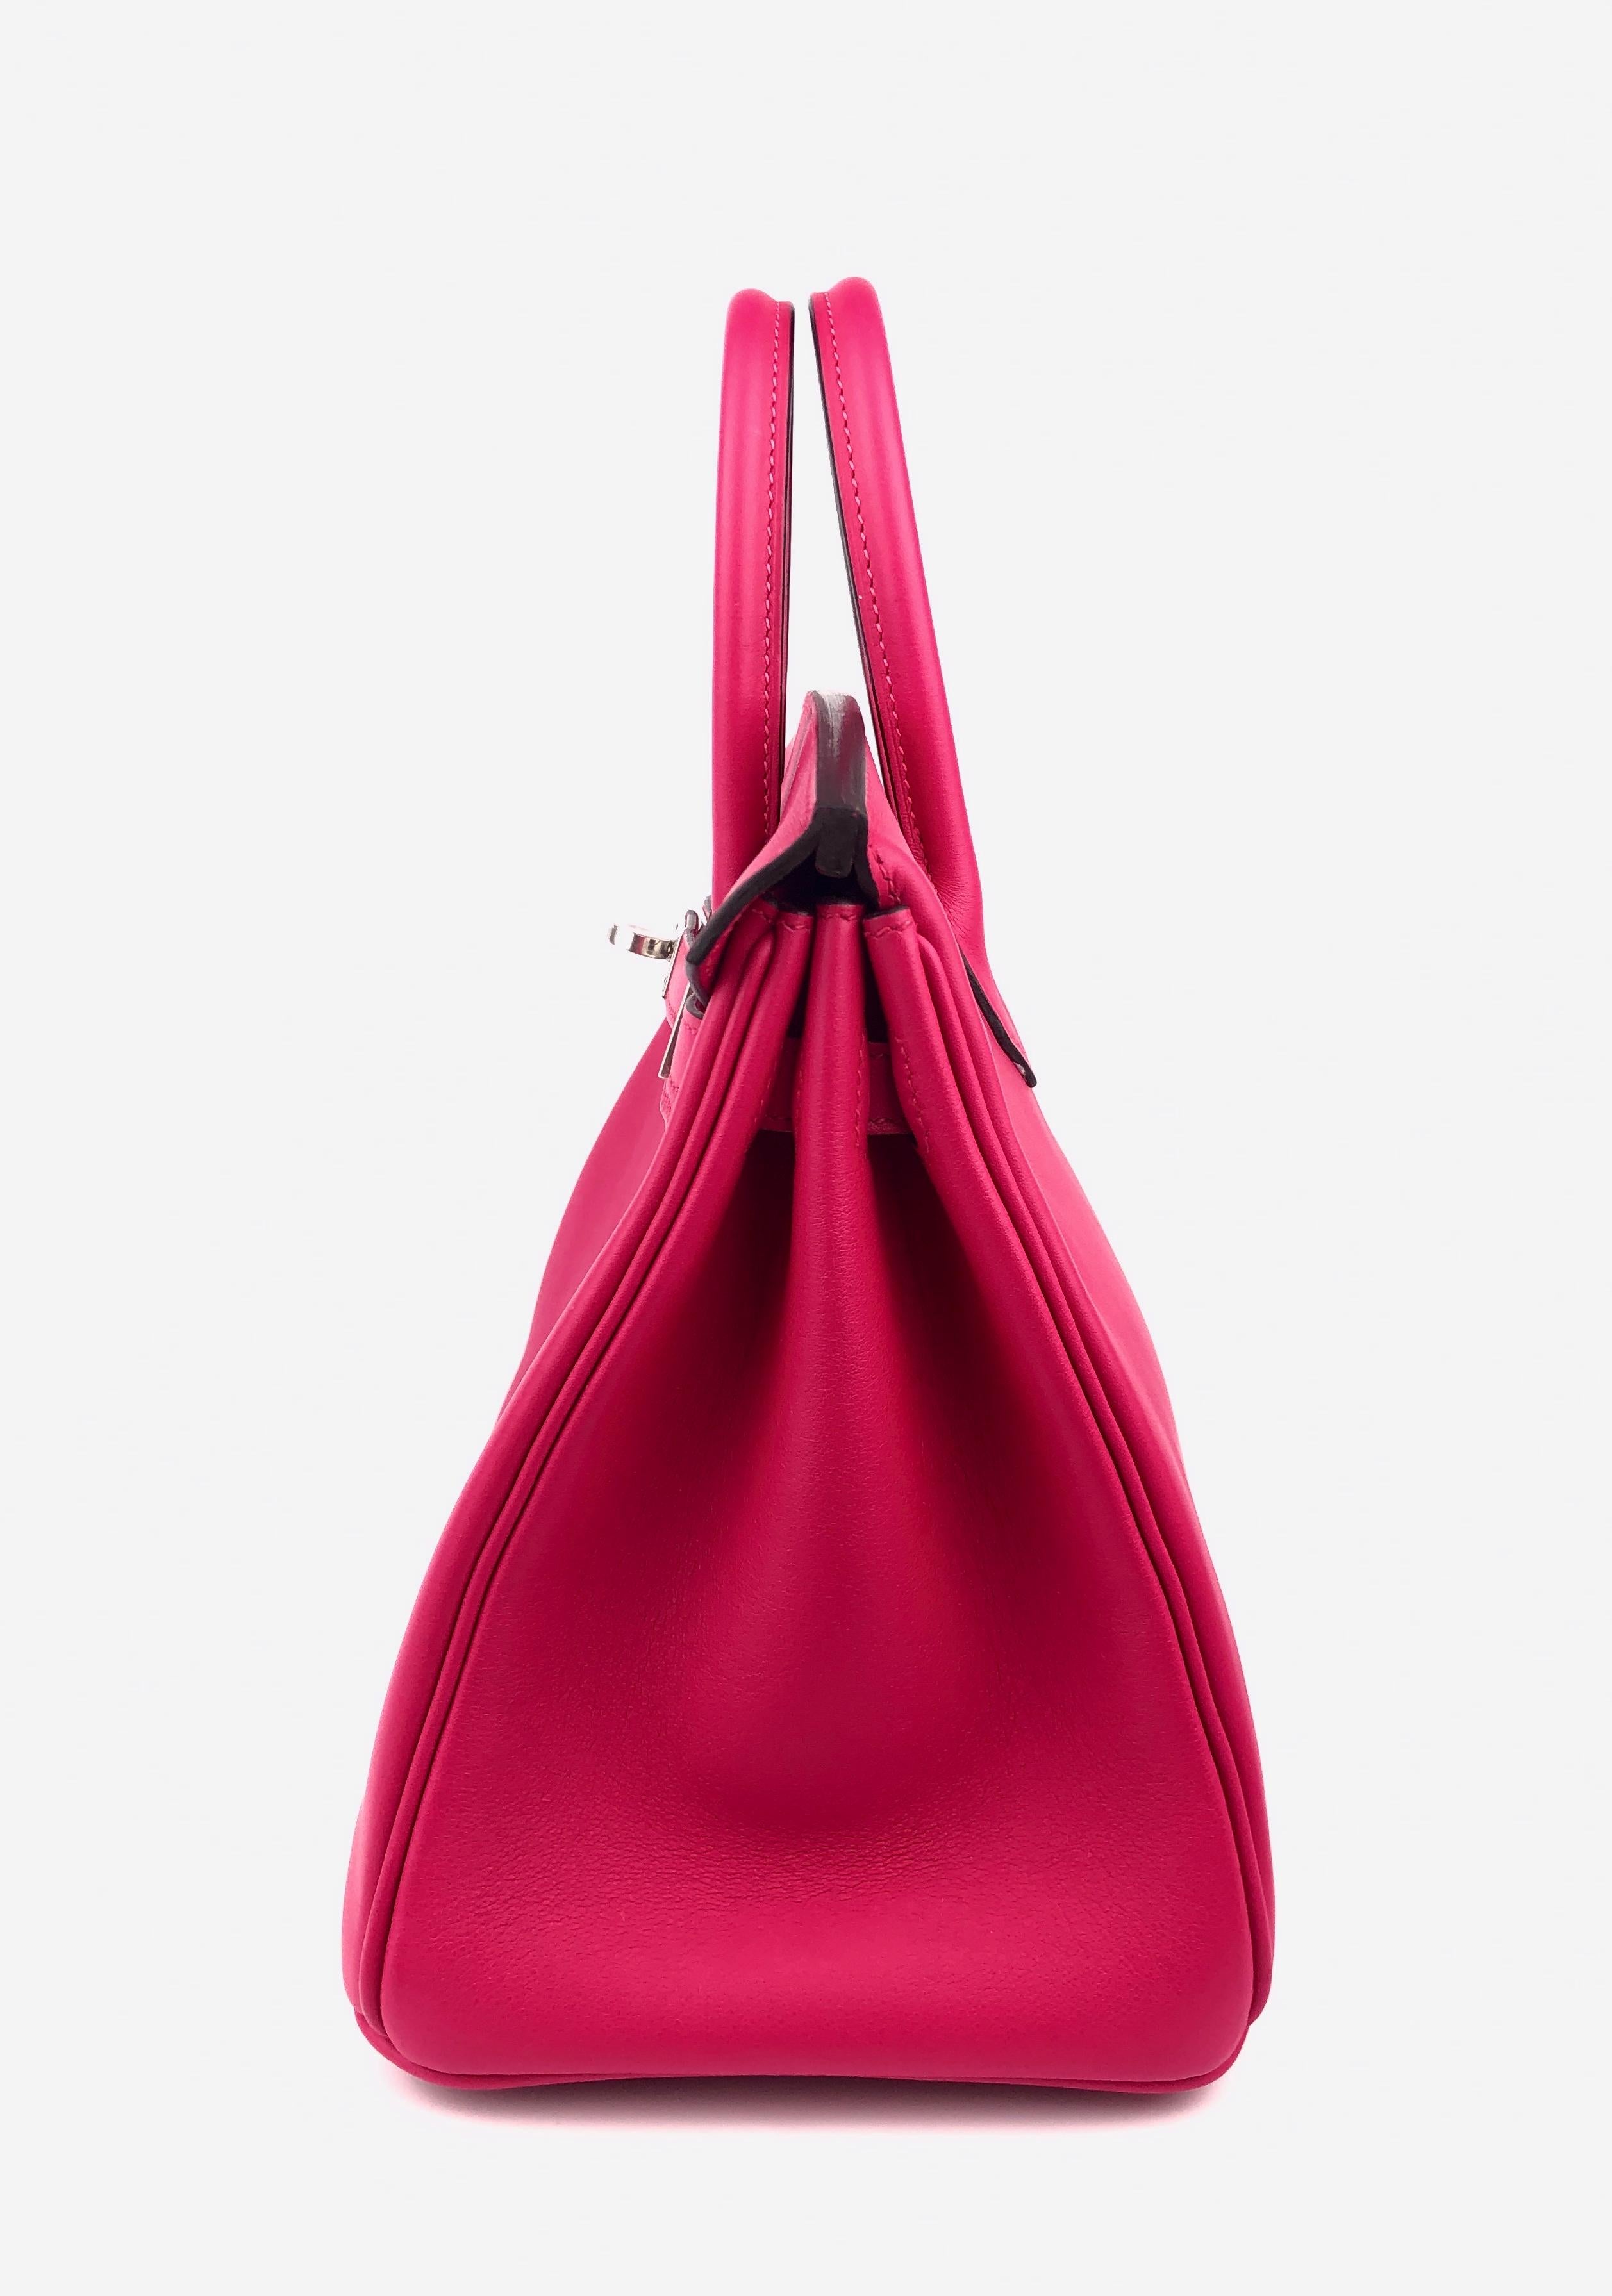 Hermes Birkin 25 Framboise Pink Red Leather Handbag Bag Palladium Hardware RARE 3